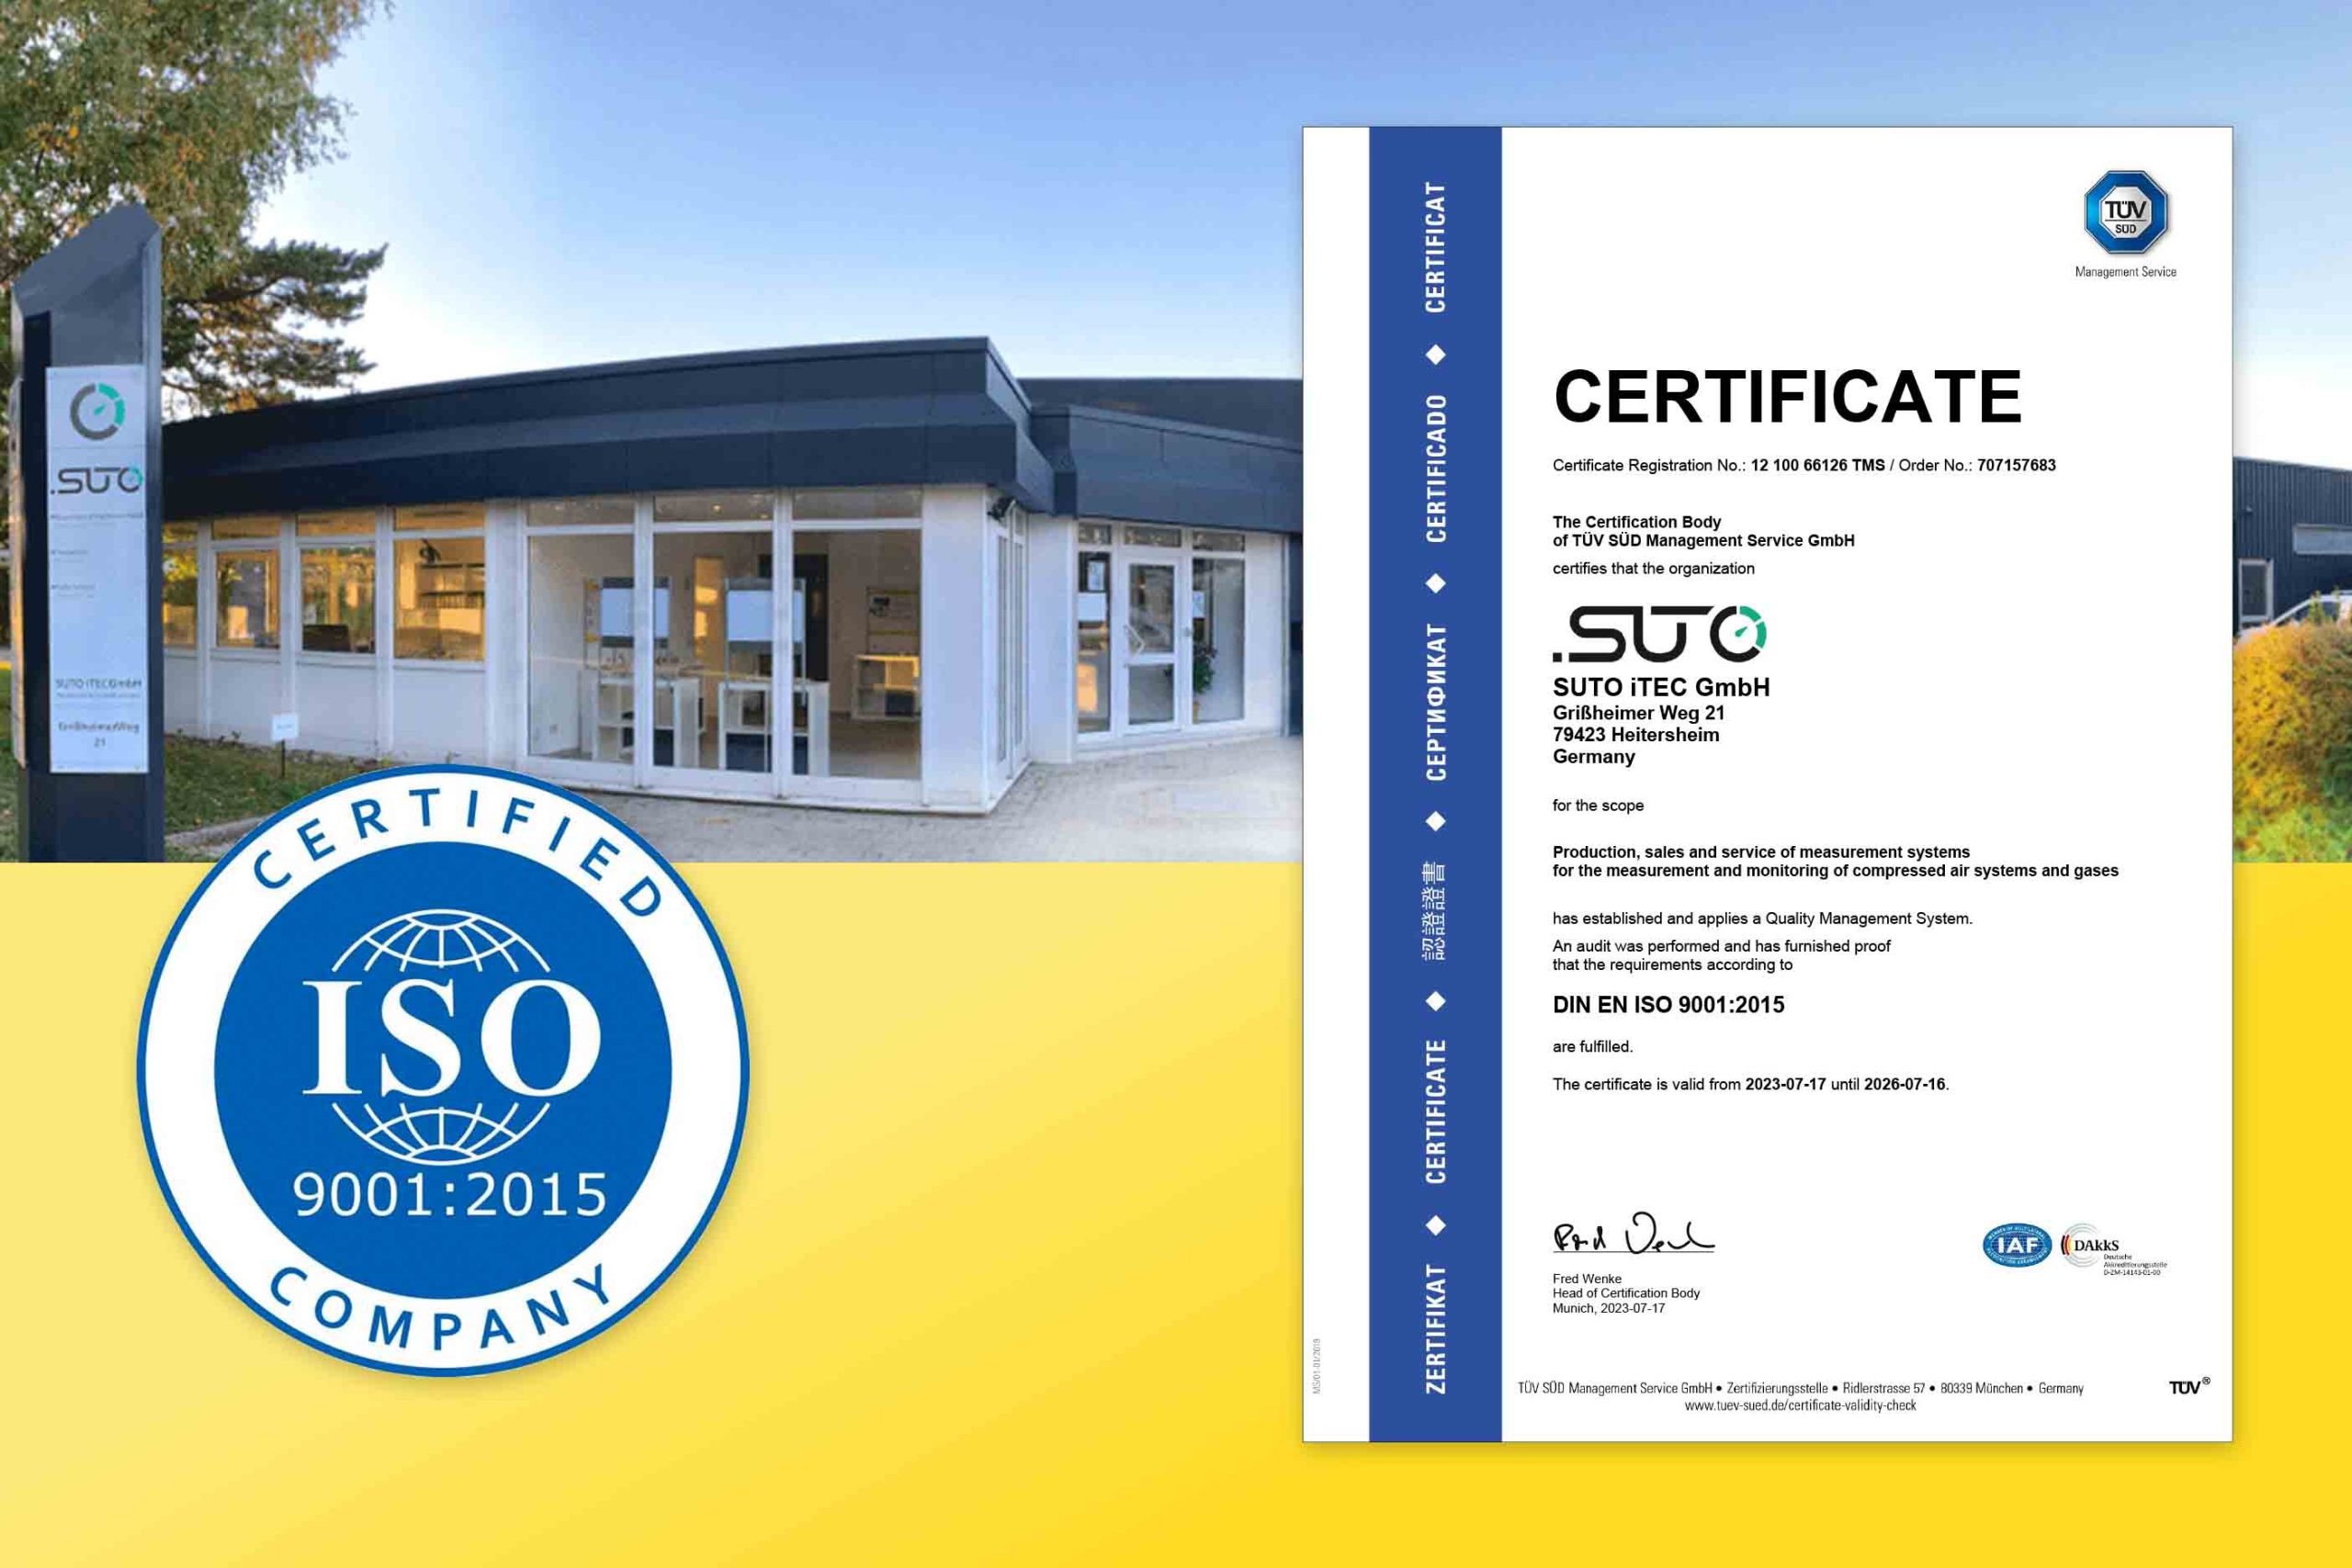 SUTO iTECドイツ本社がISO 9001:2015認証を取得